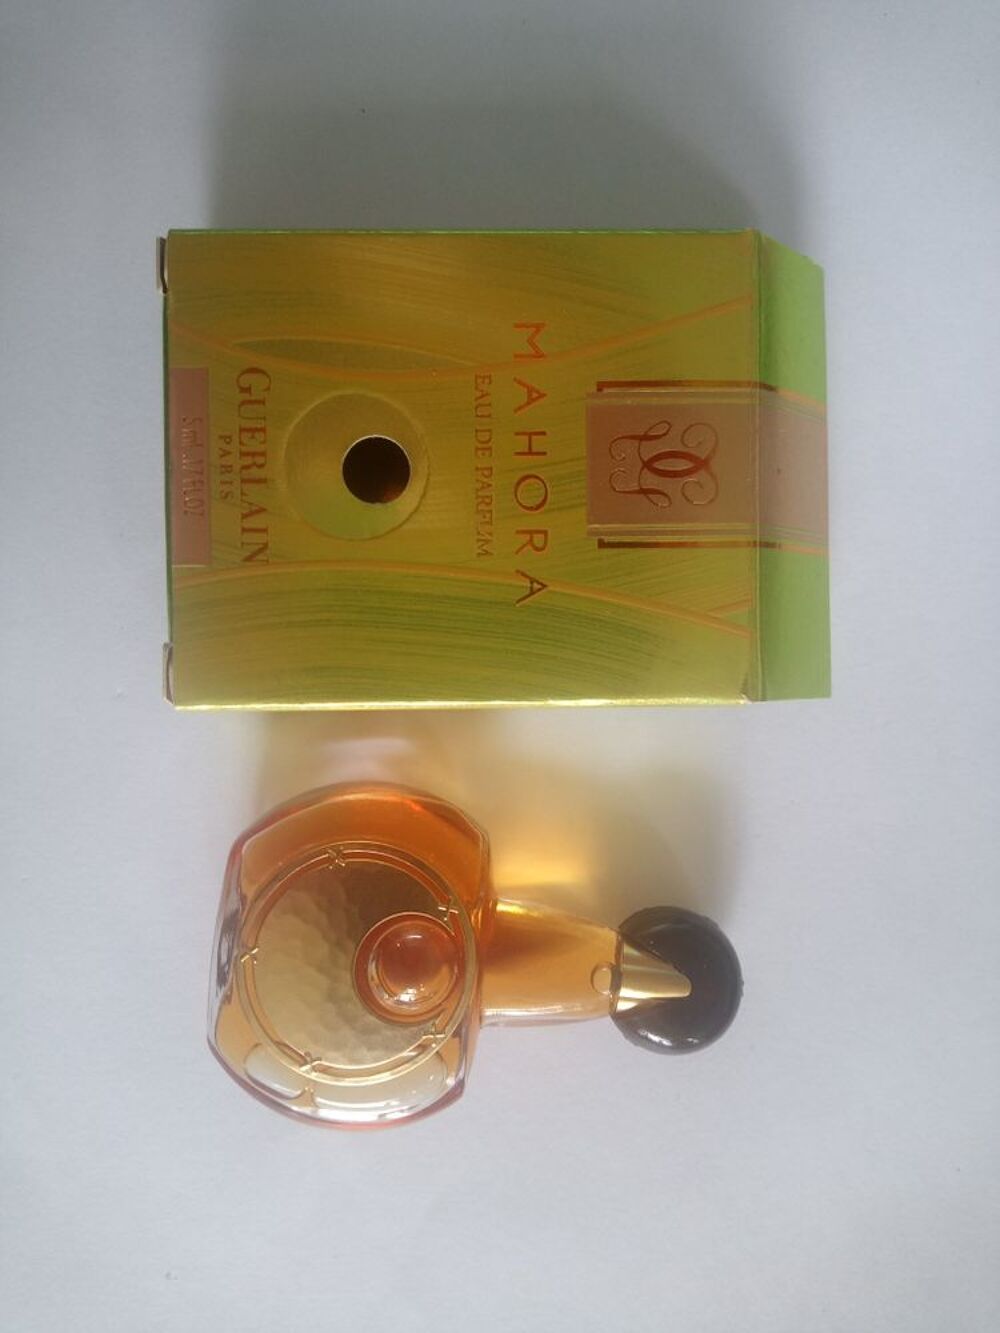 parfum Mahora Guerlain 